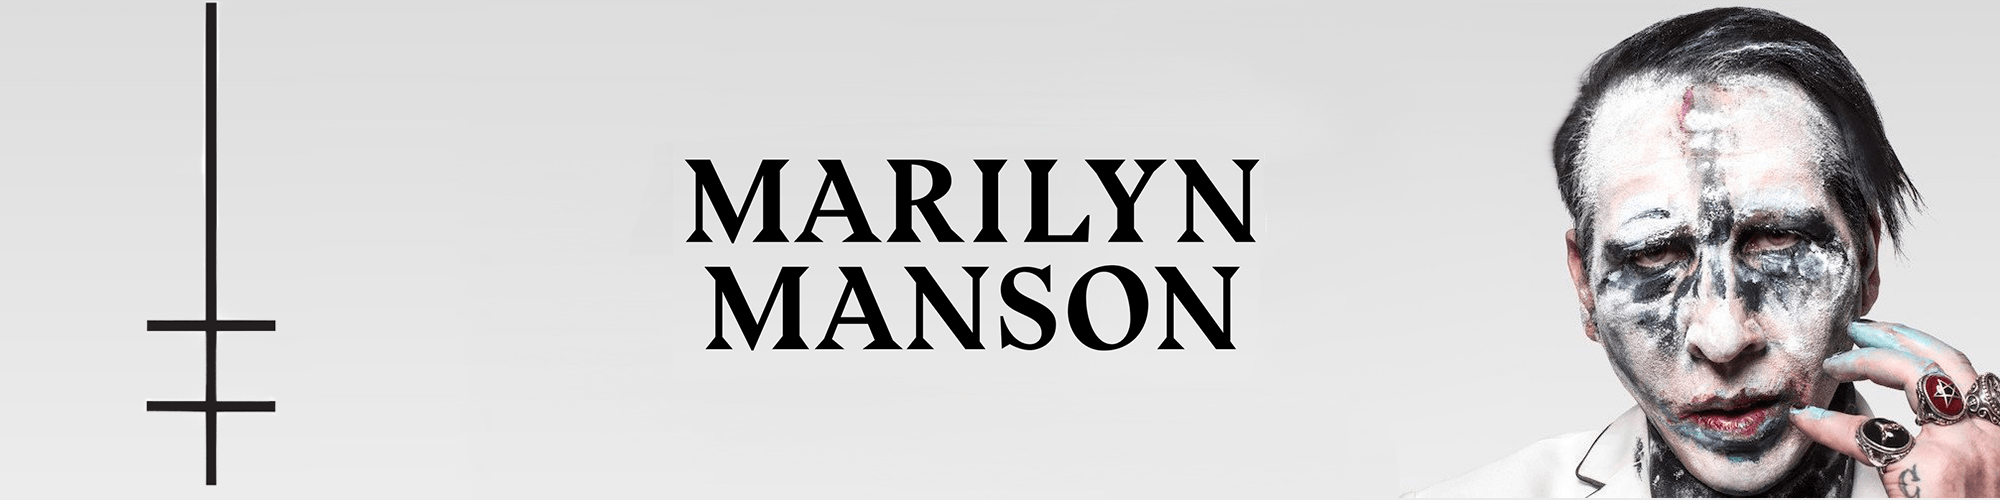 Marilyn Manson Original Logo - Marilyn Manson Store